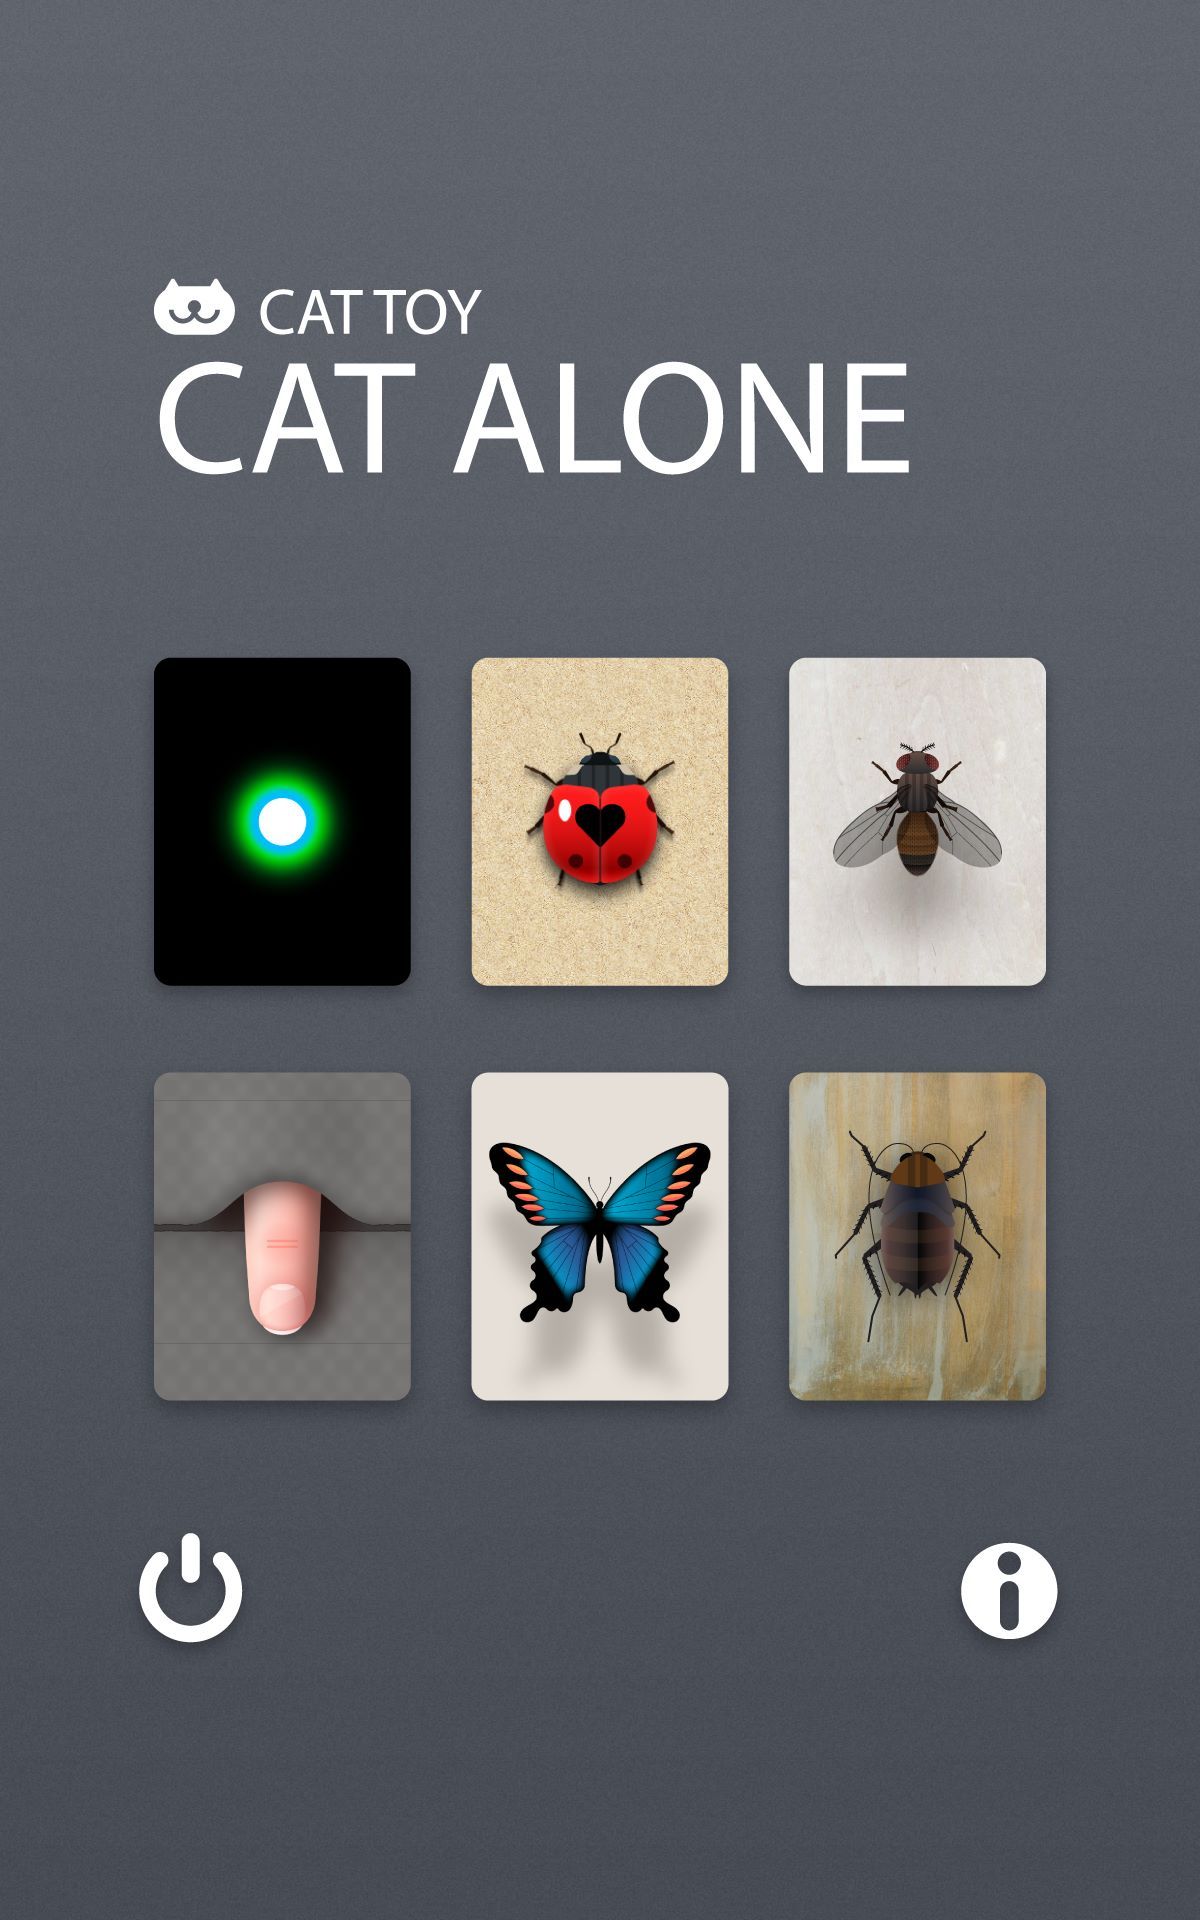 CAT ALONE - Cat toy